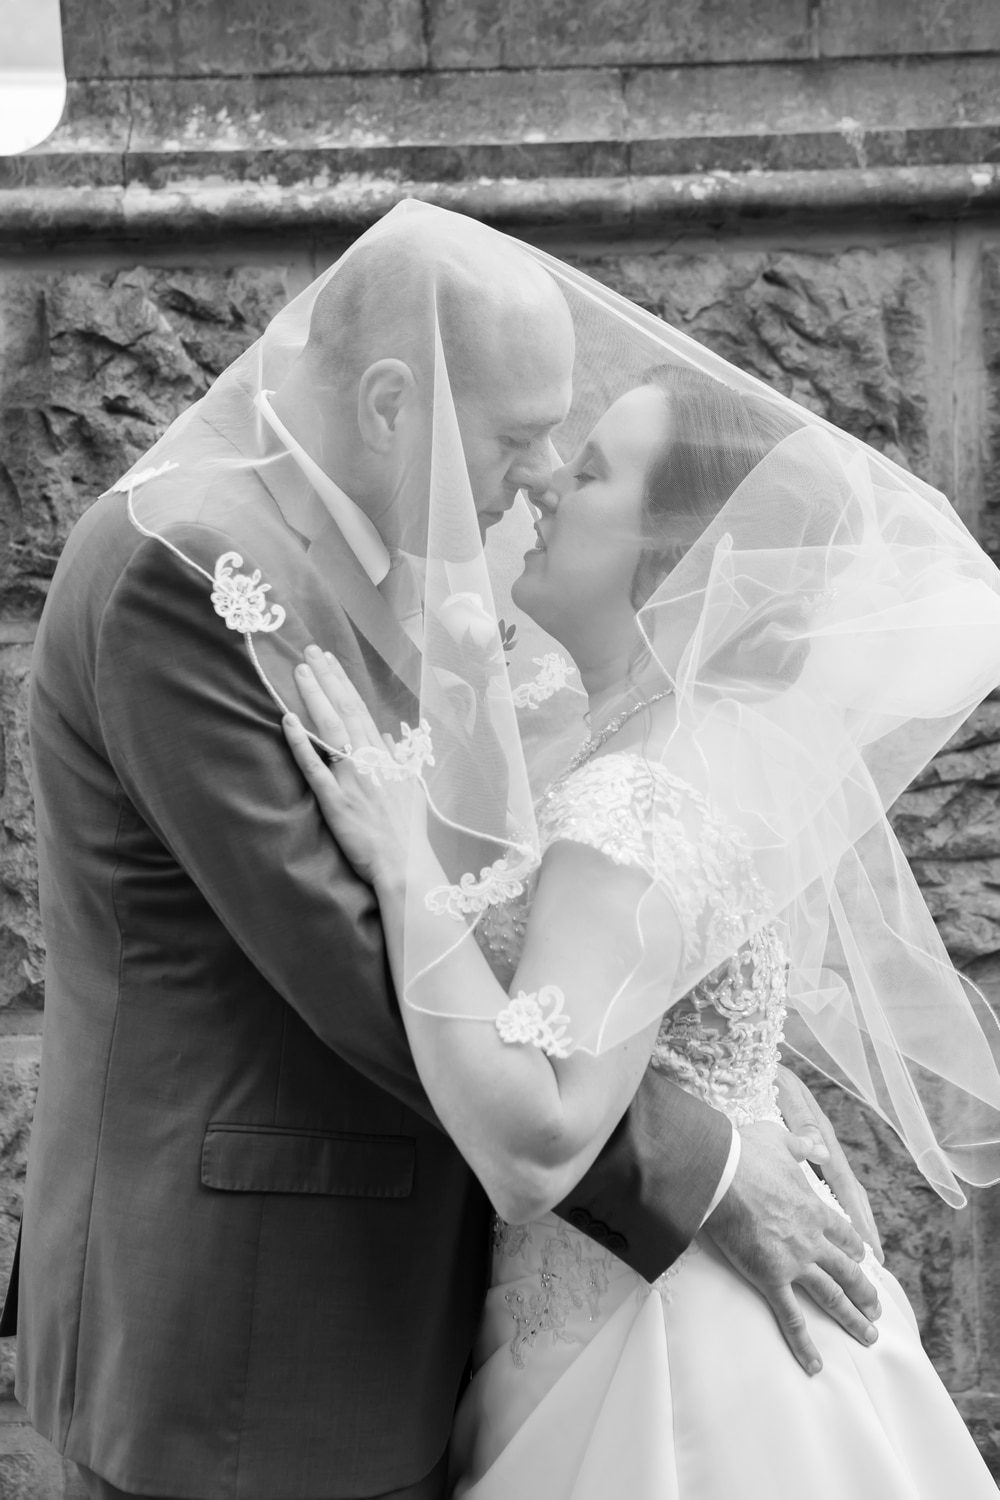 Bride and Groom under the wedding veil